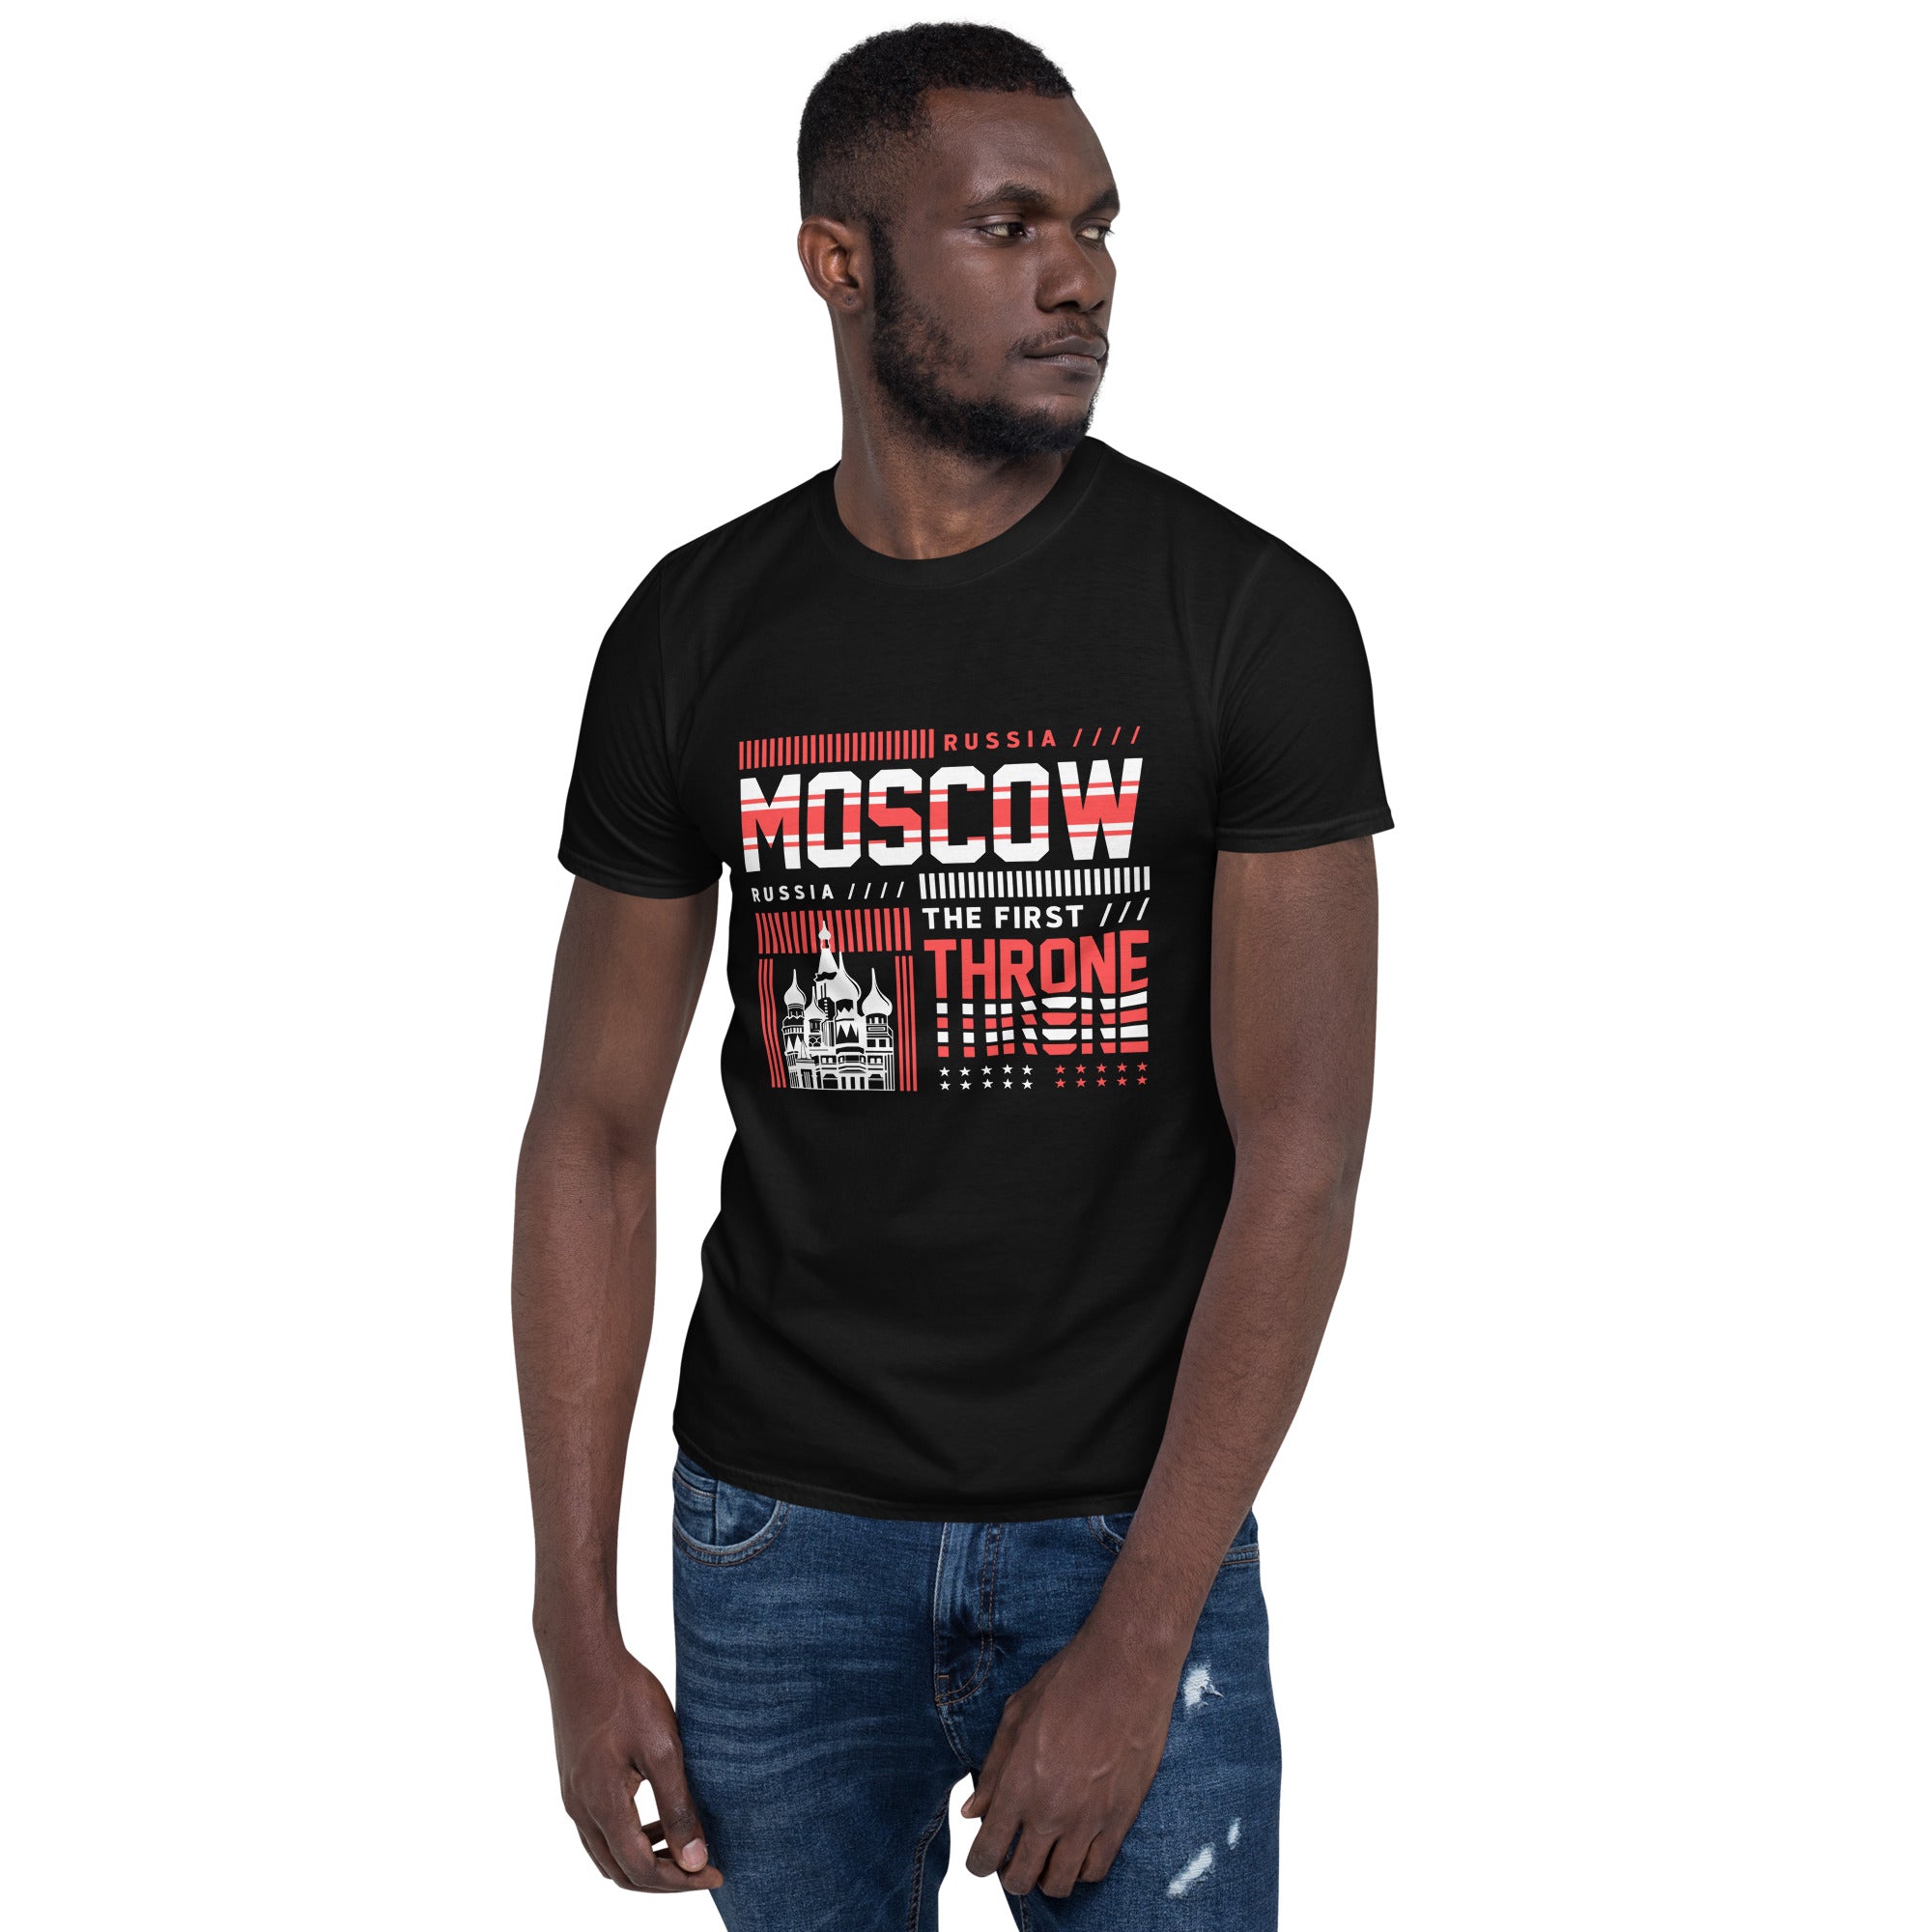 Moscow - Short-Sleeve Unisex T-Shirt